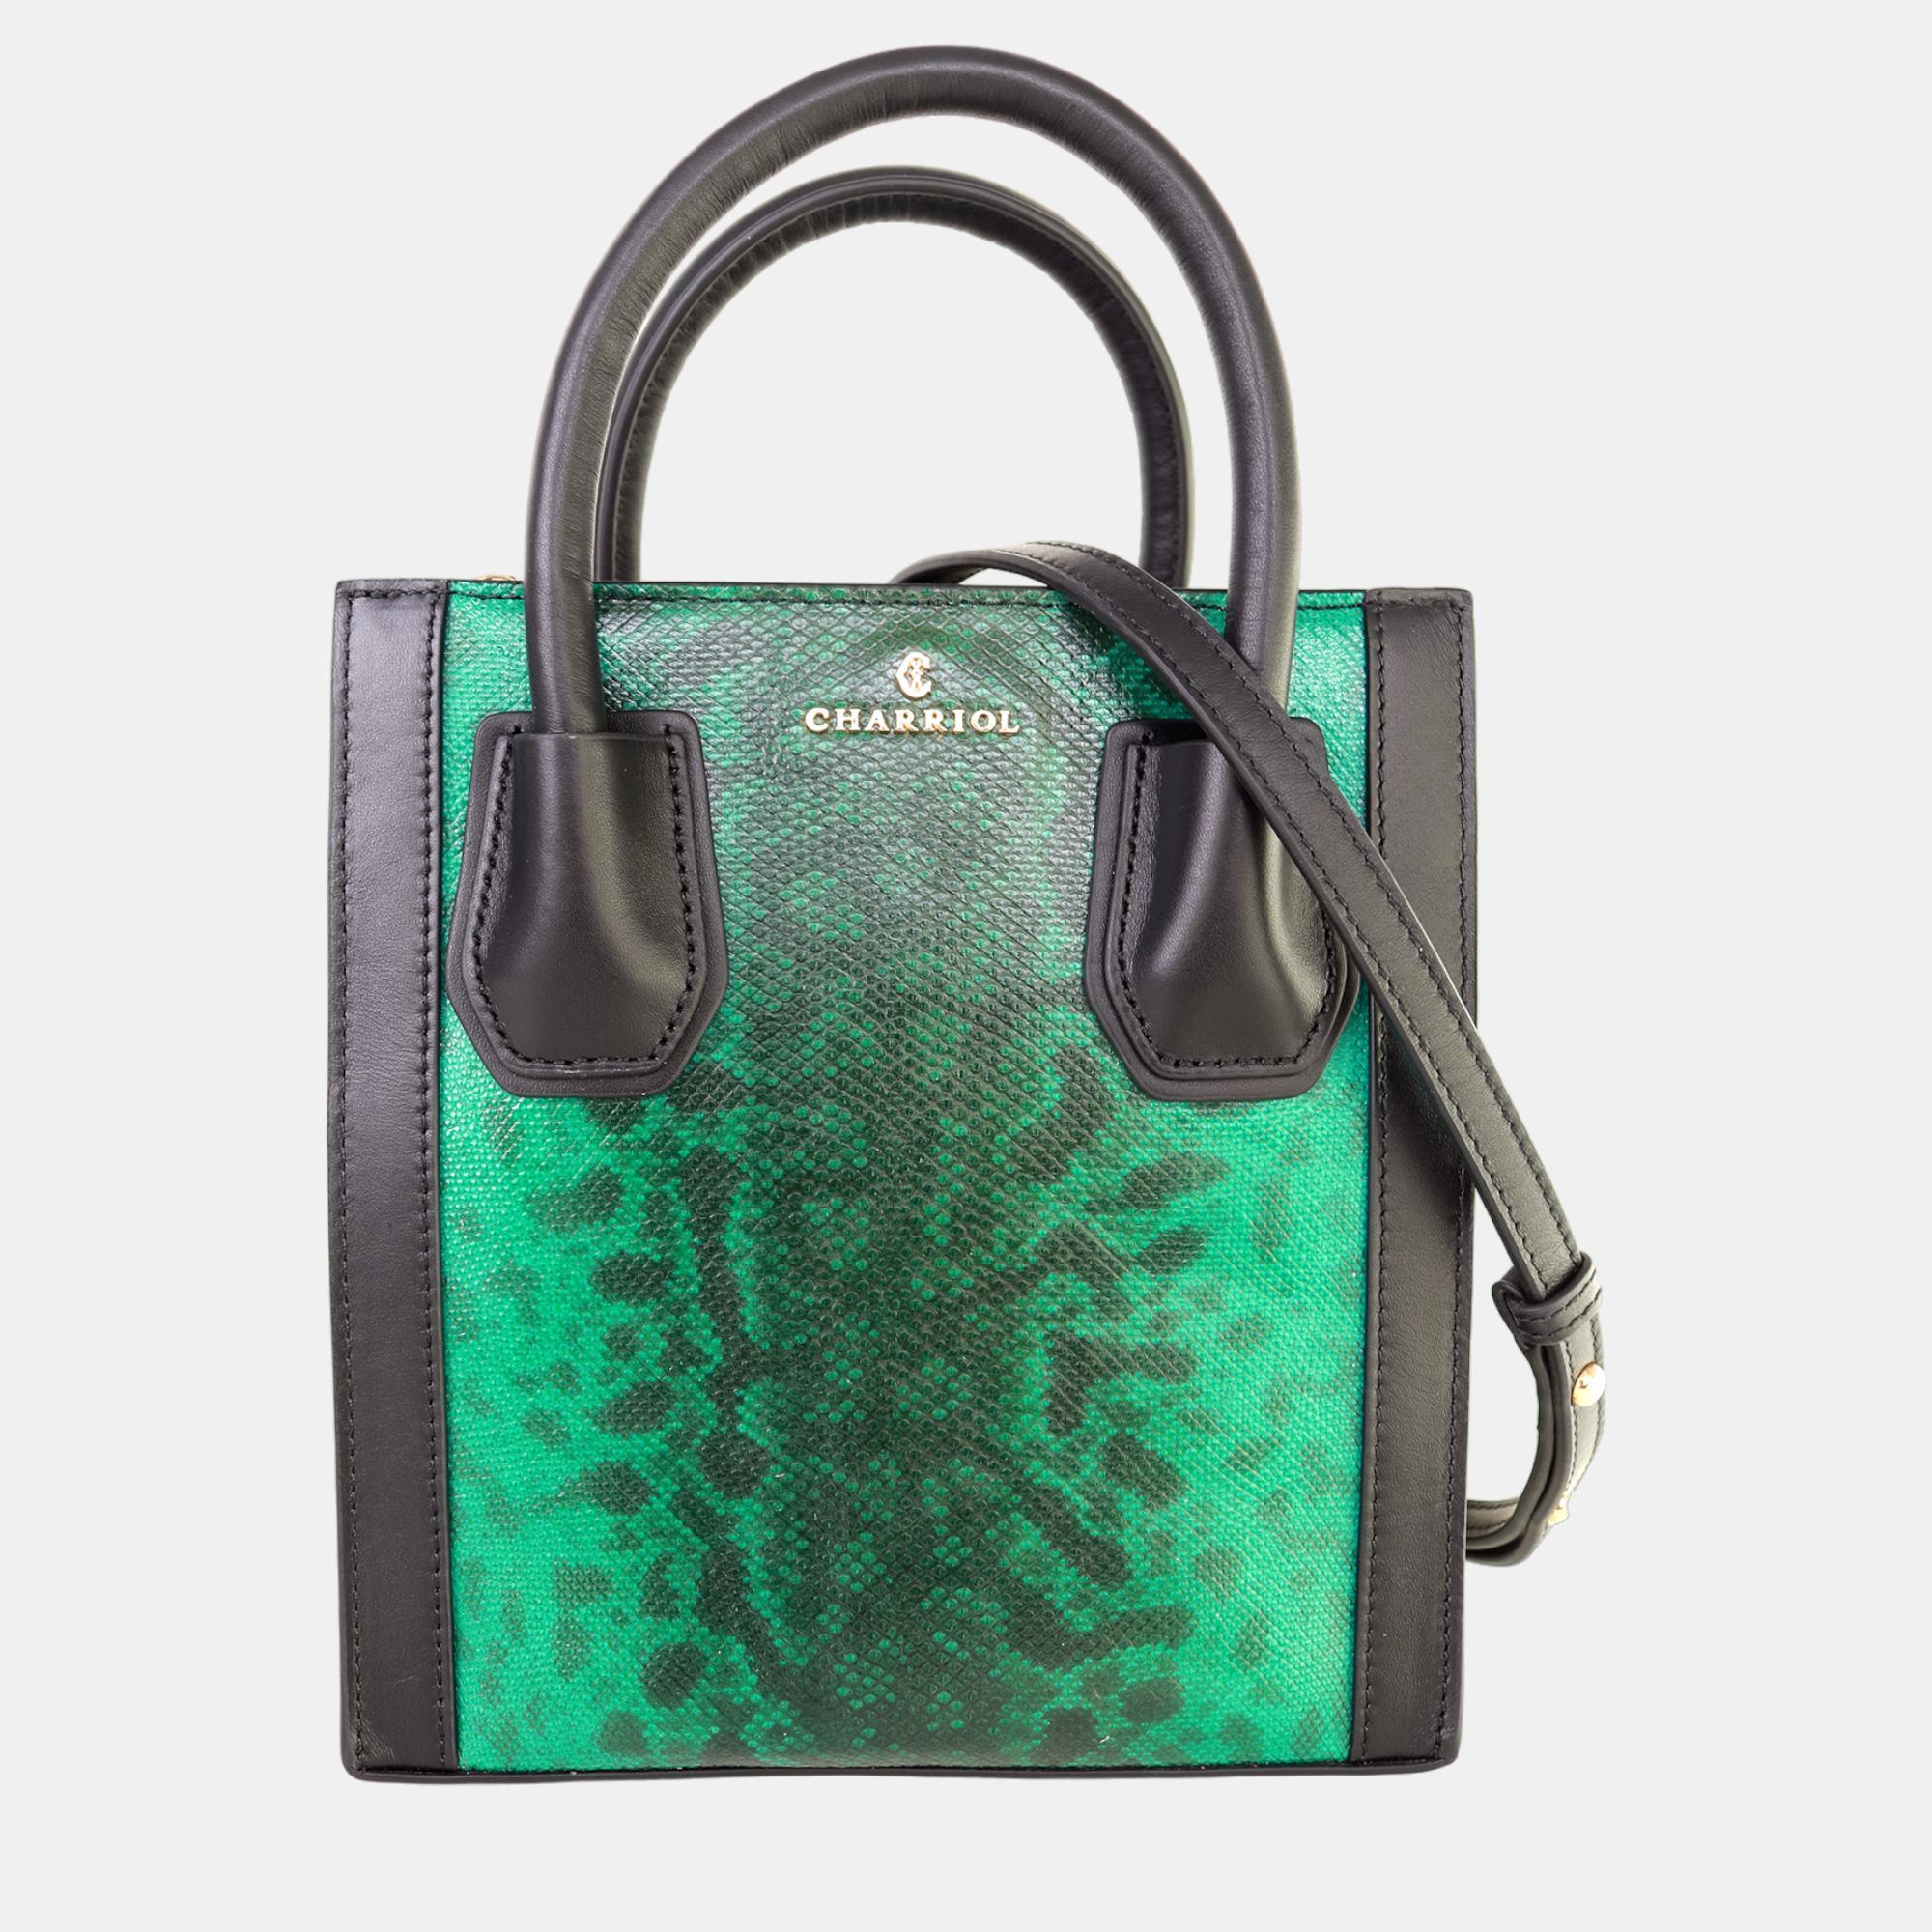 Charriol green leather tote exotic skin handbag